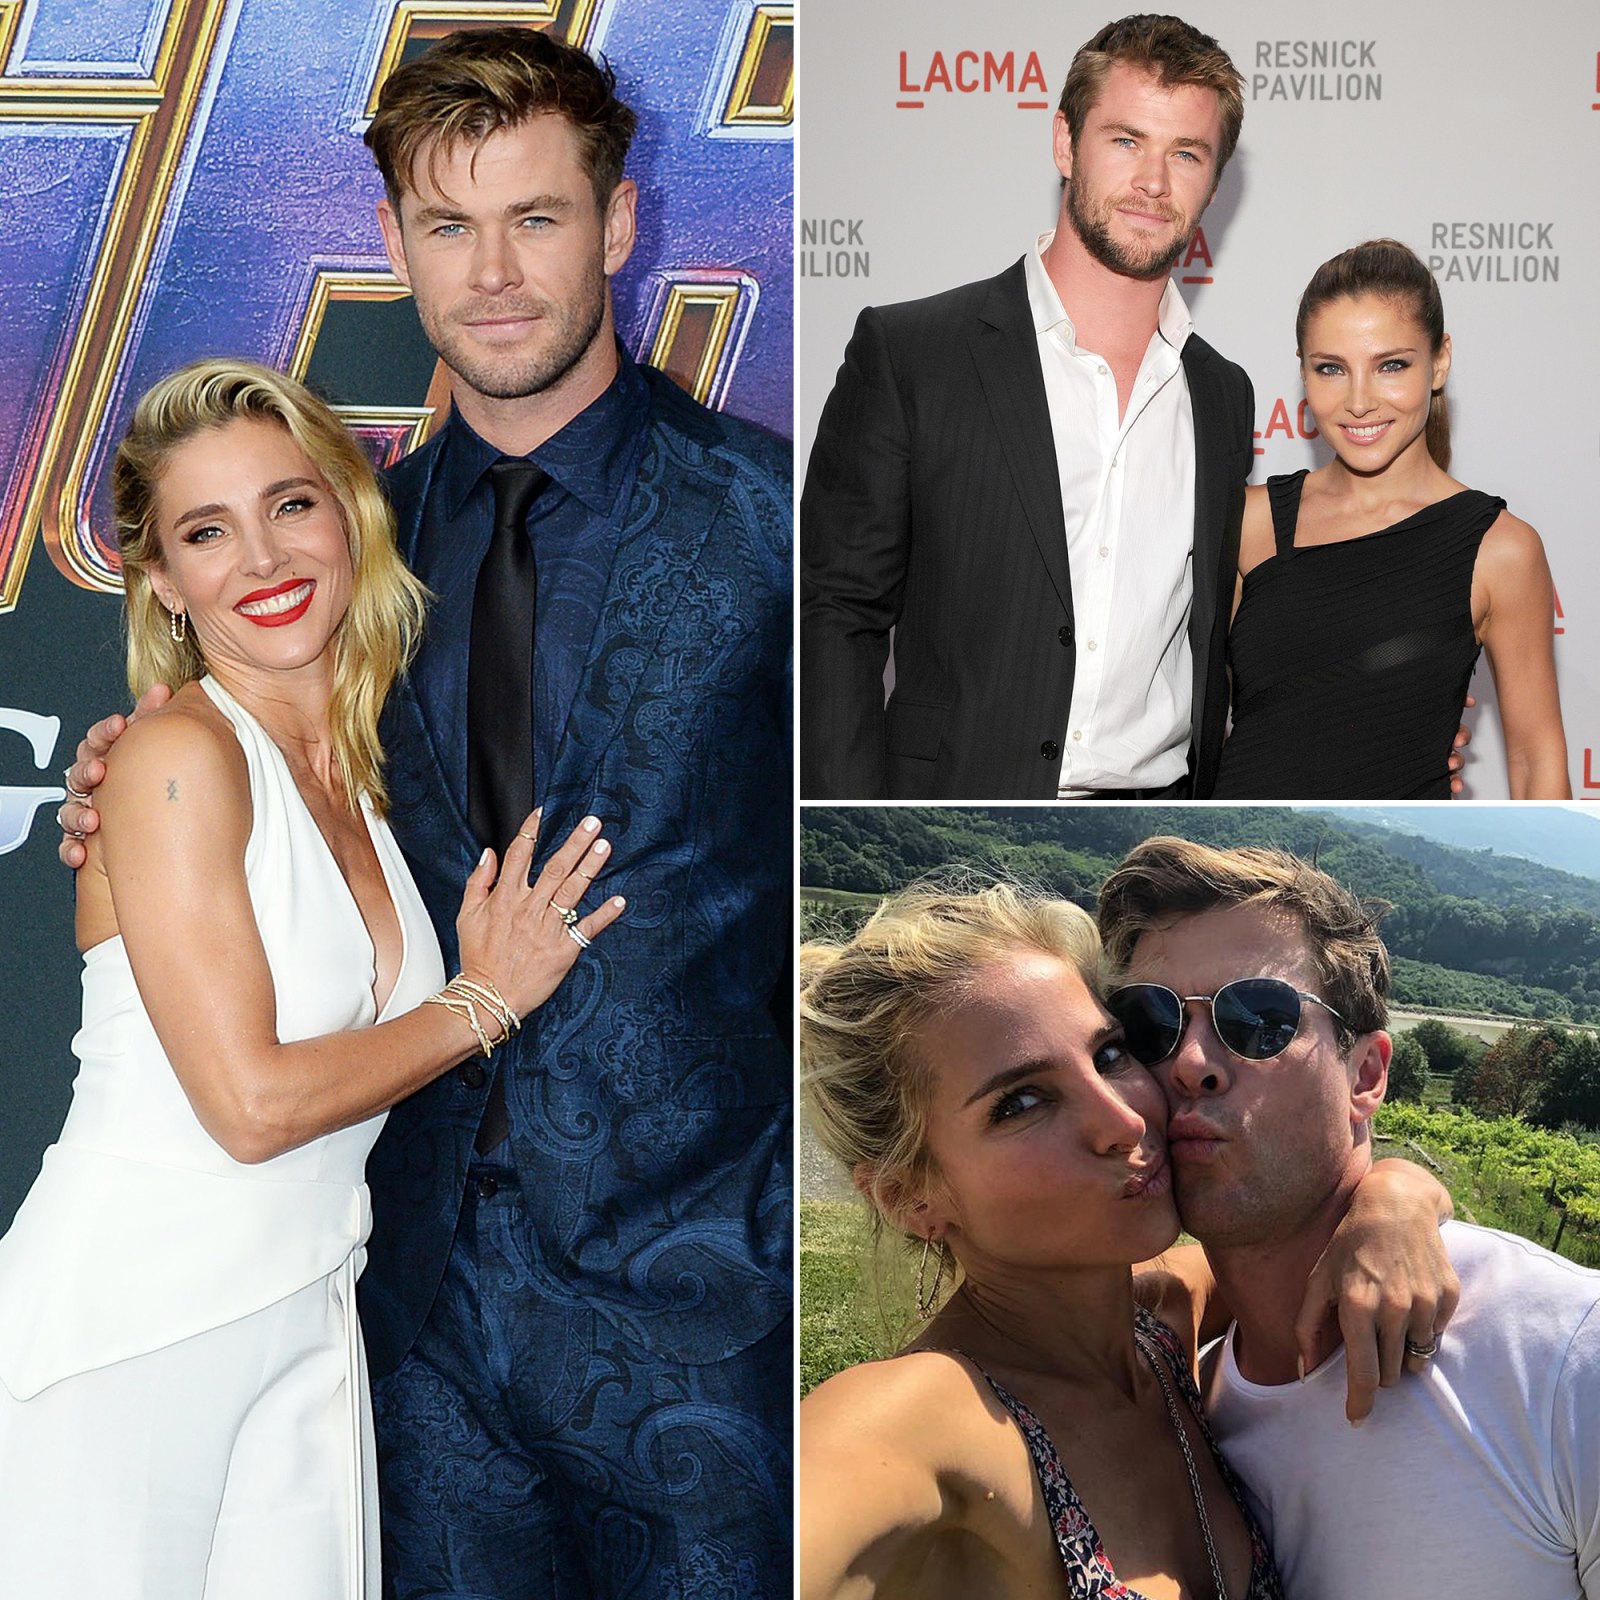 Chris Hemsworth And Elsa Pataky's Relationship Timeline